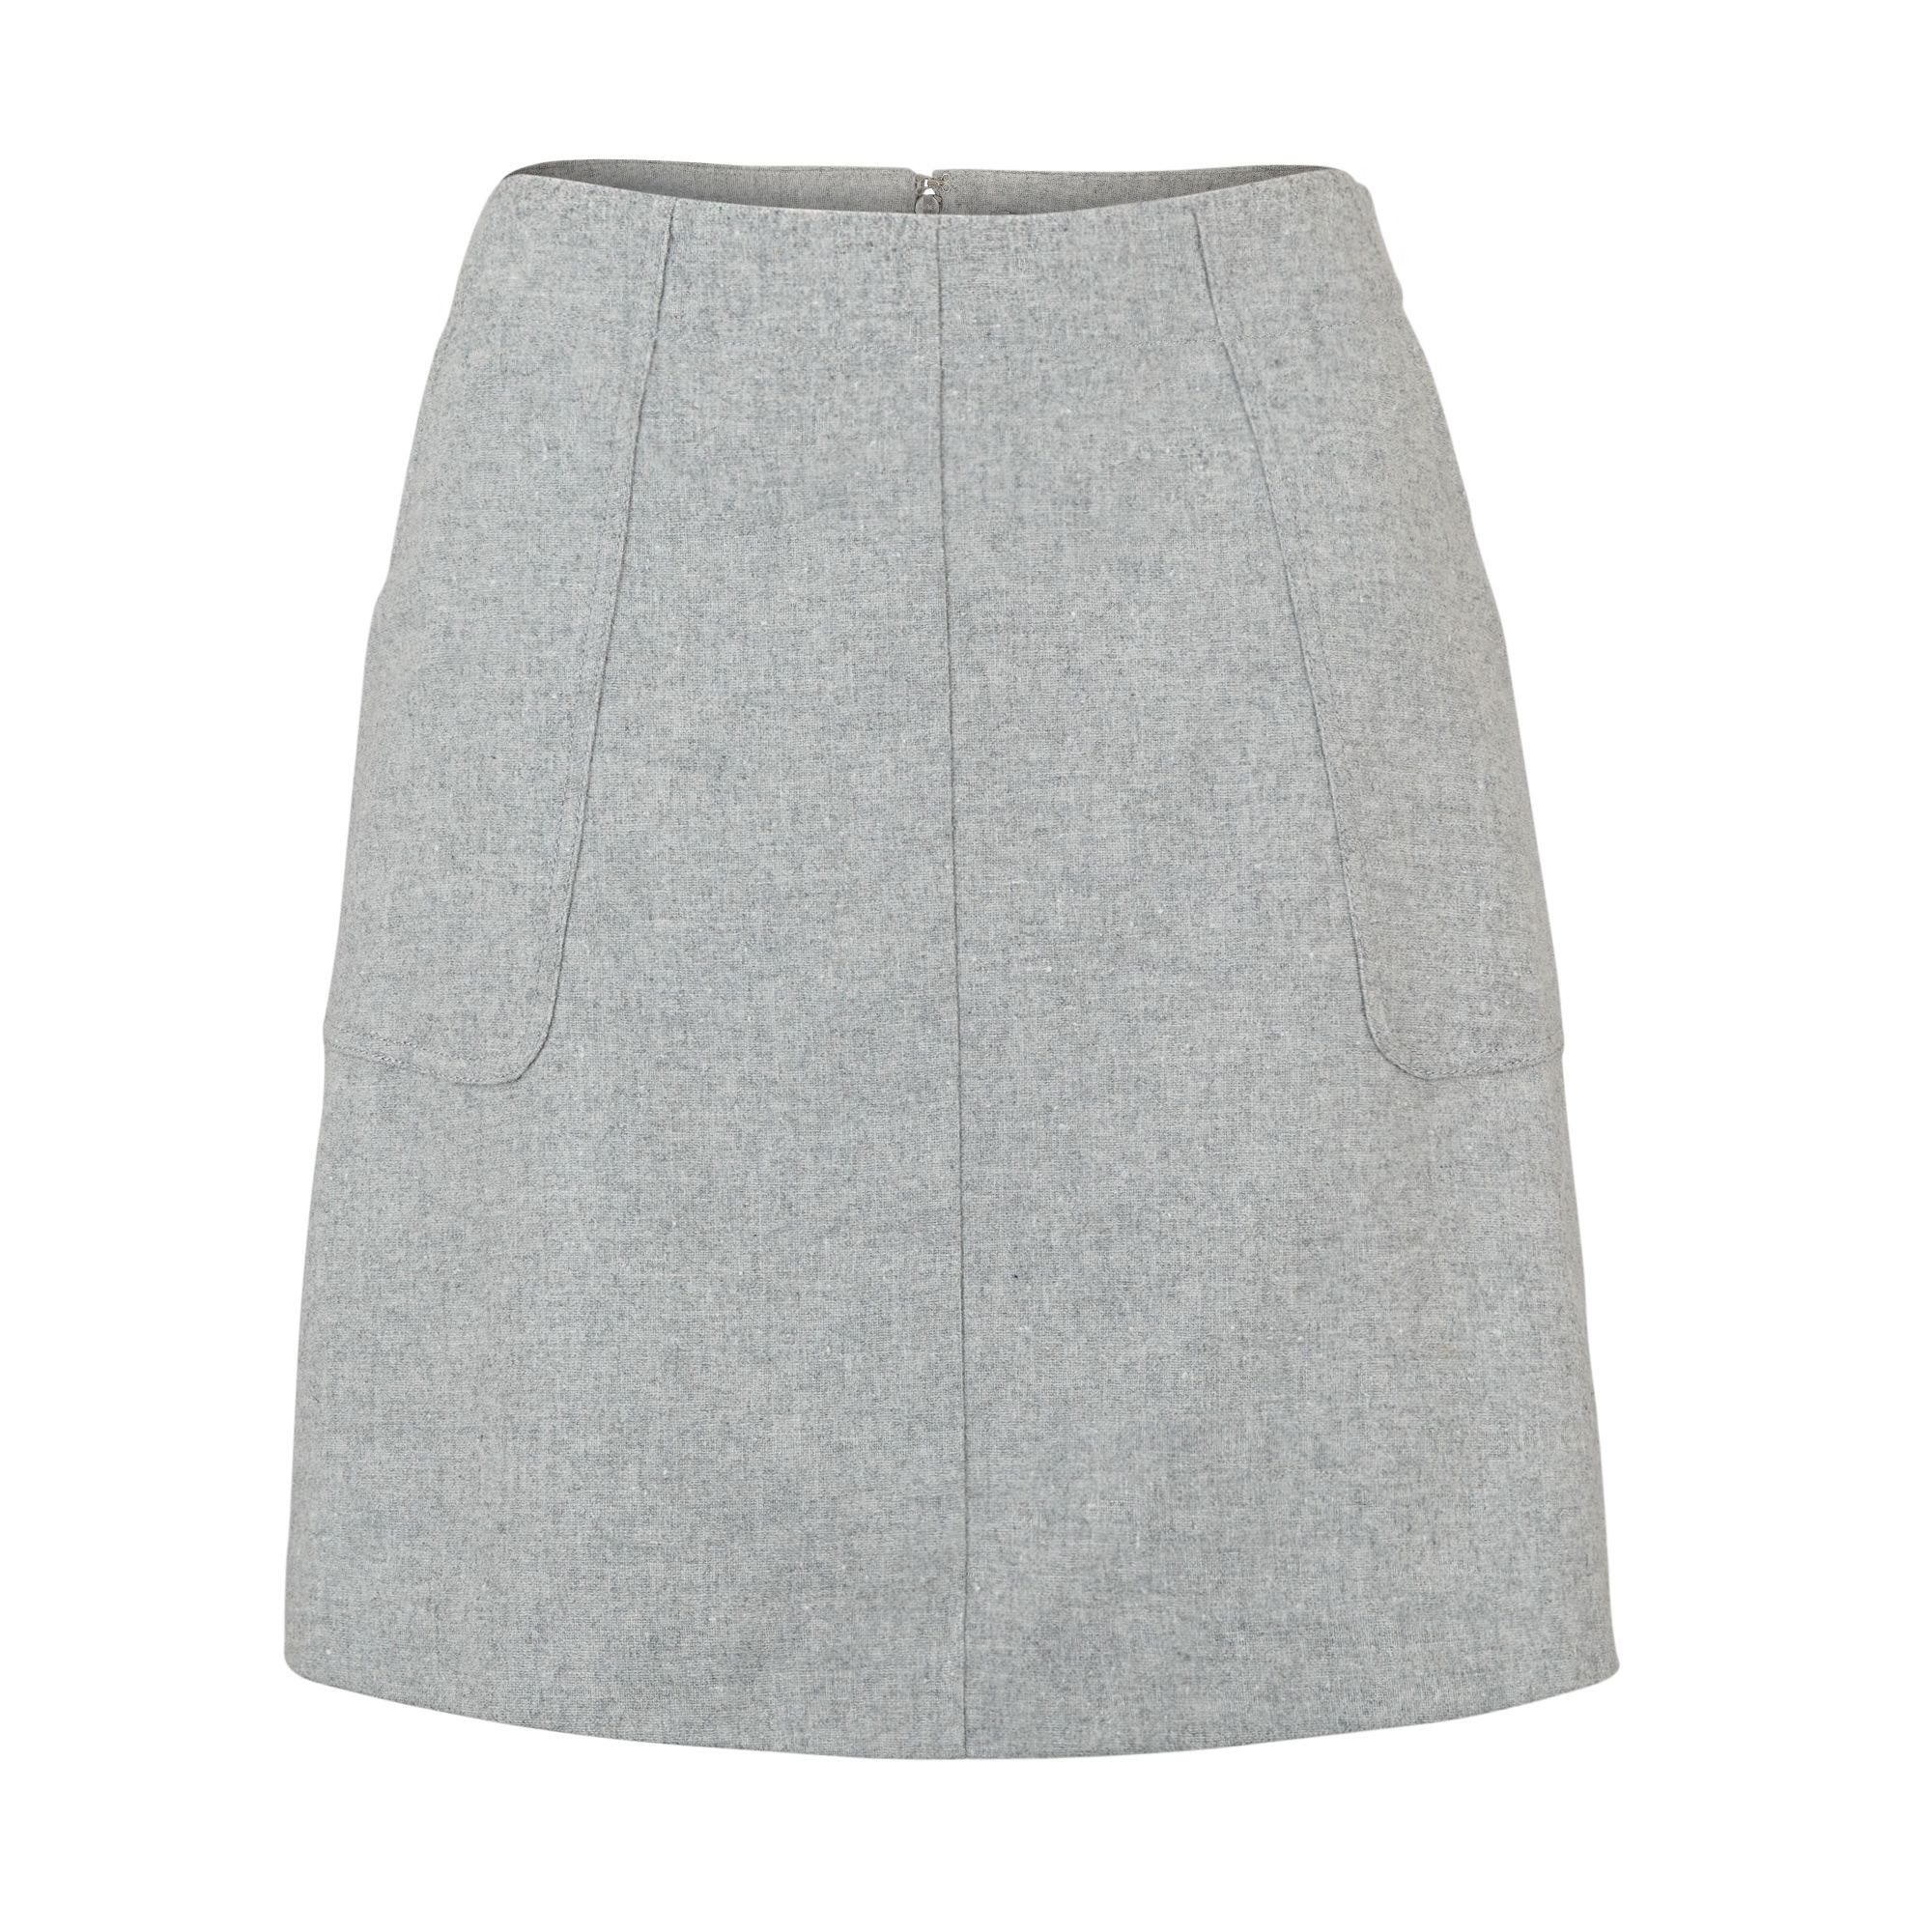 Grey A Line Skirt - Dress Ala